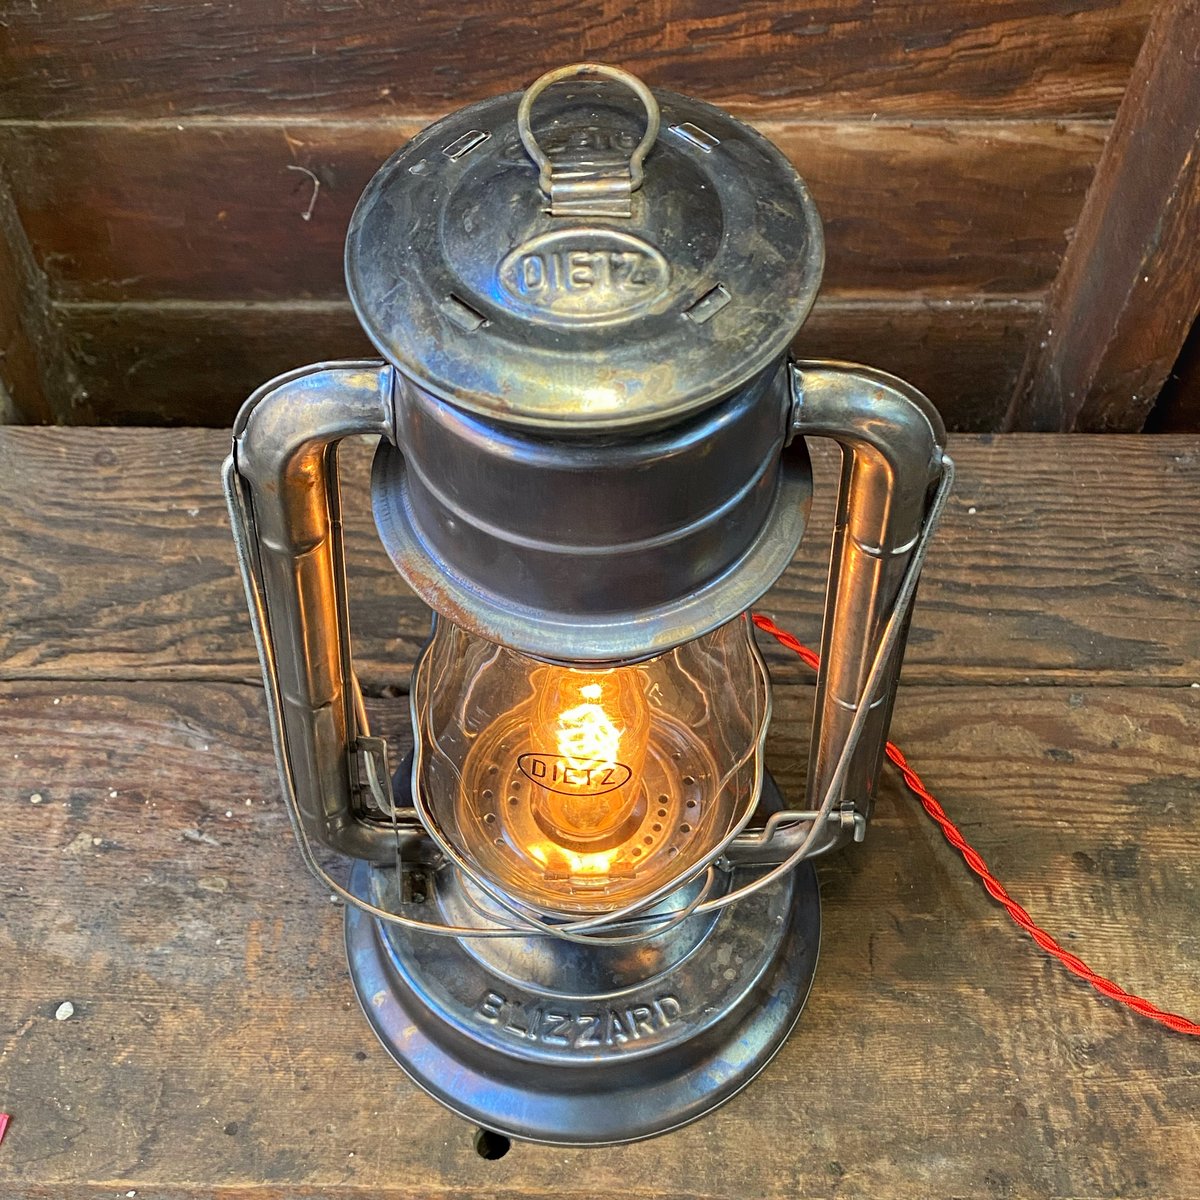 Unfinished Dietz Electric Lantern